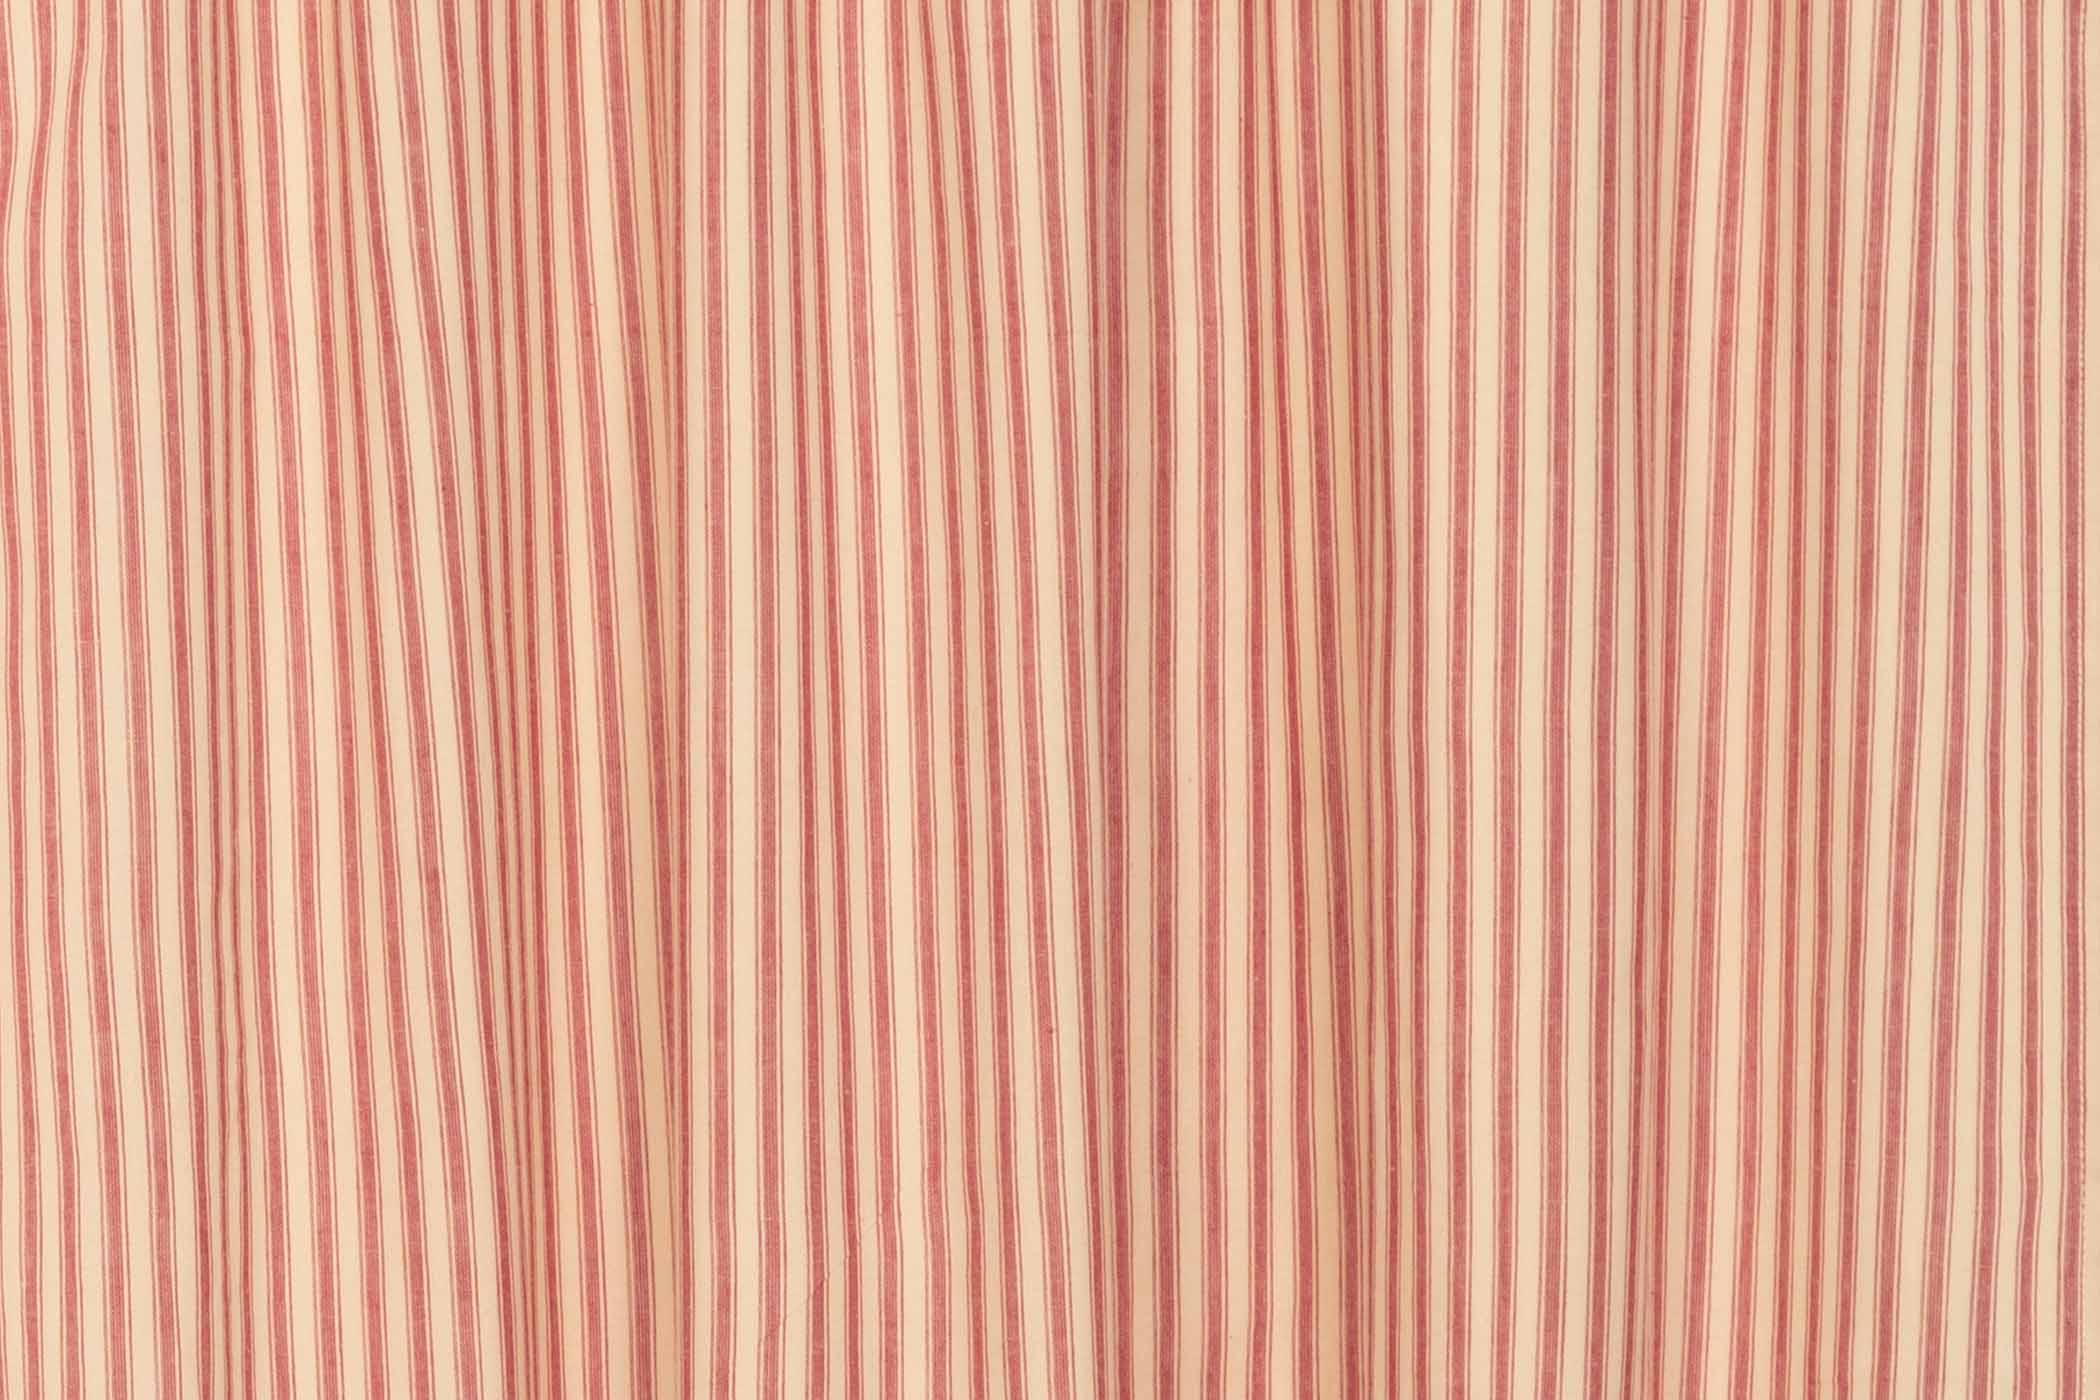 Sawyer Mill Red Ticking Stripe Valance 16x72